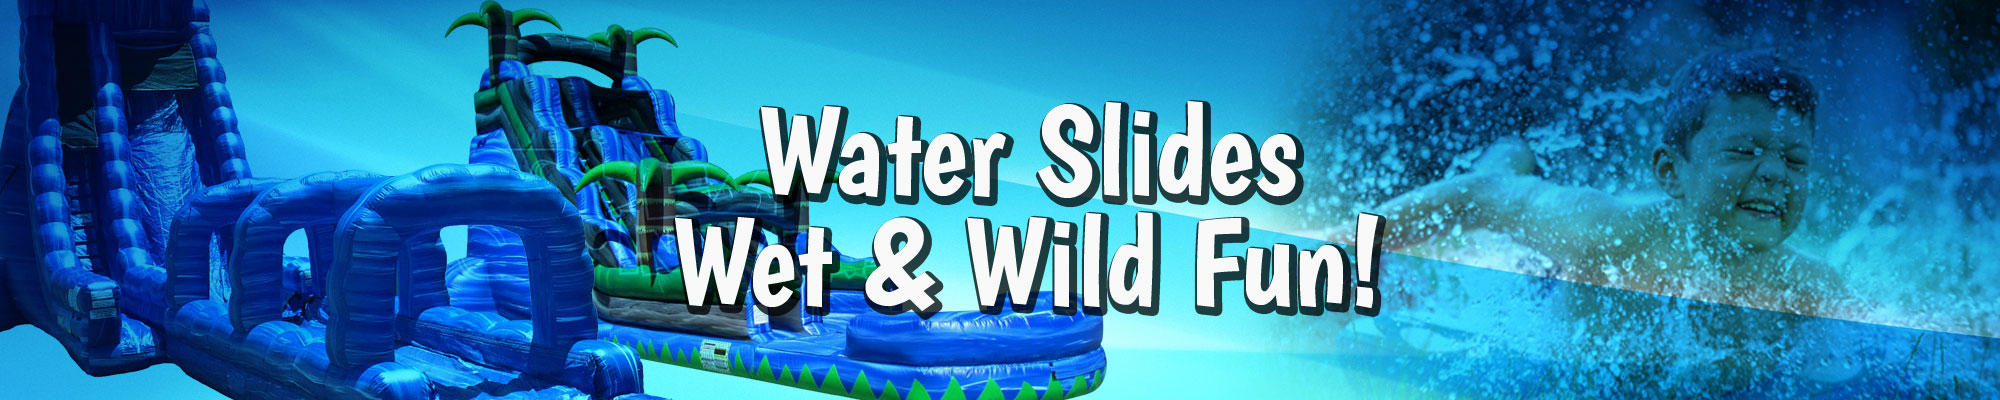 water slide category